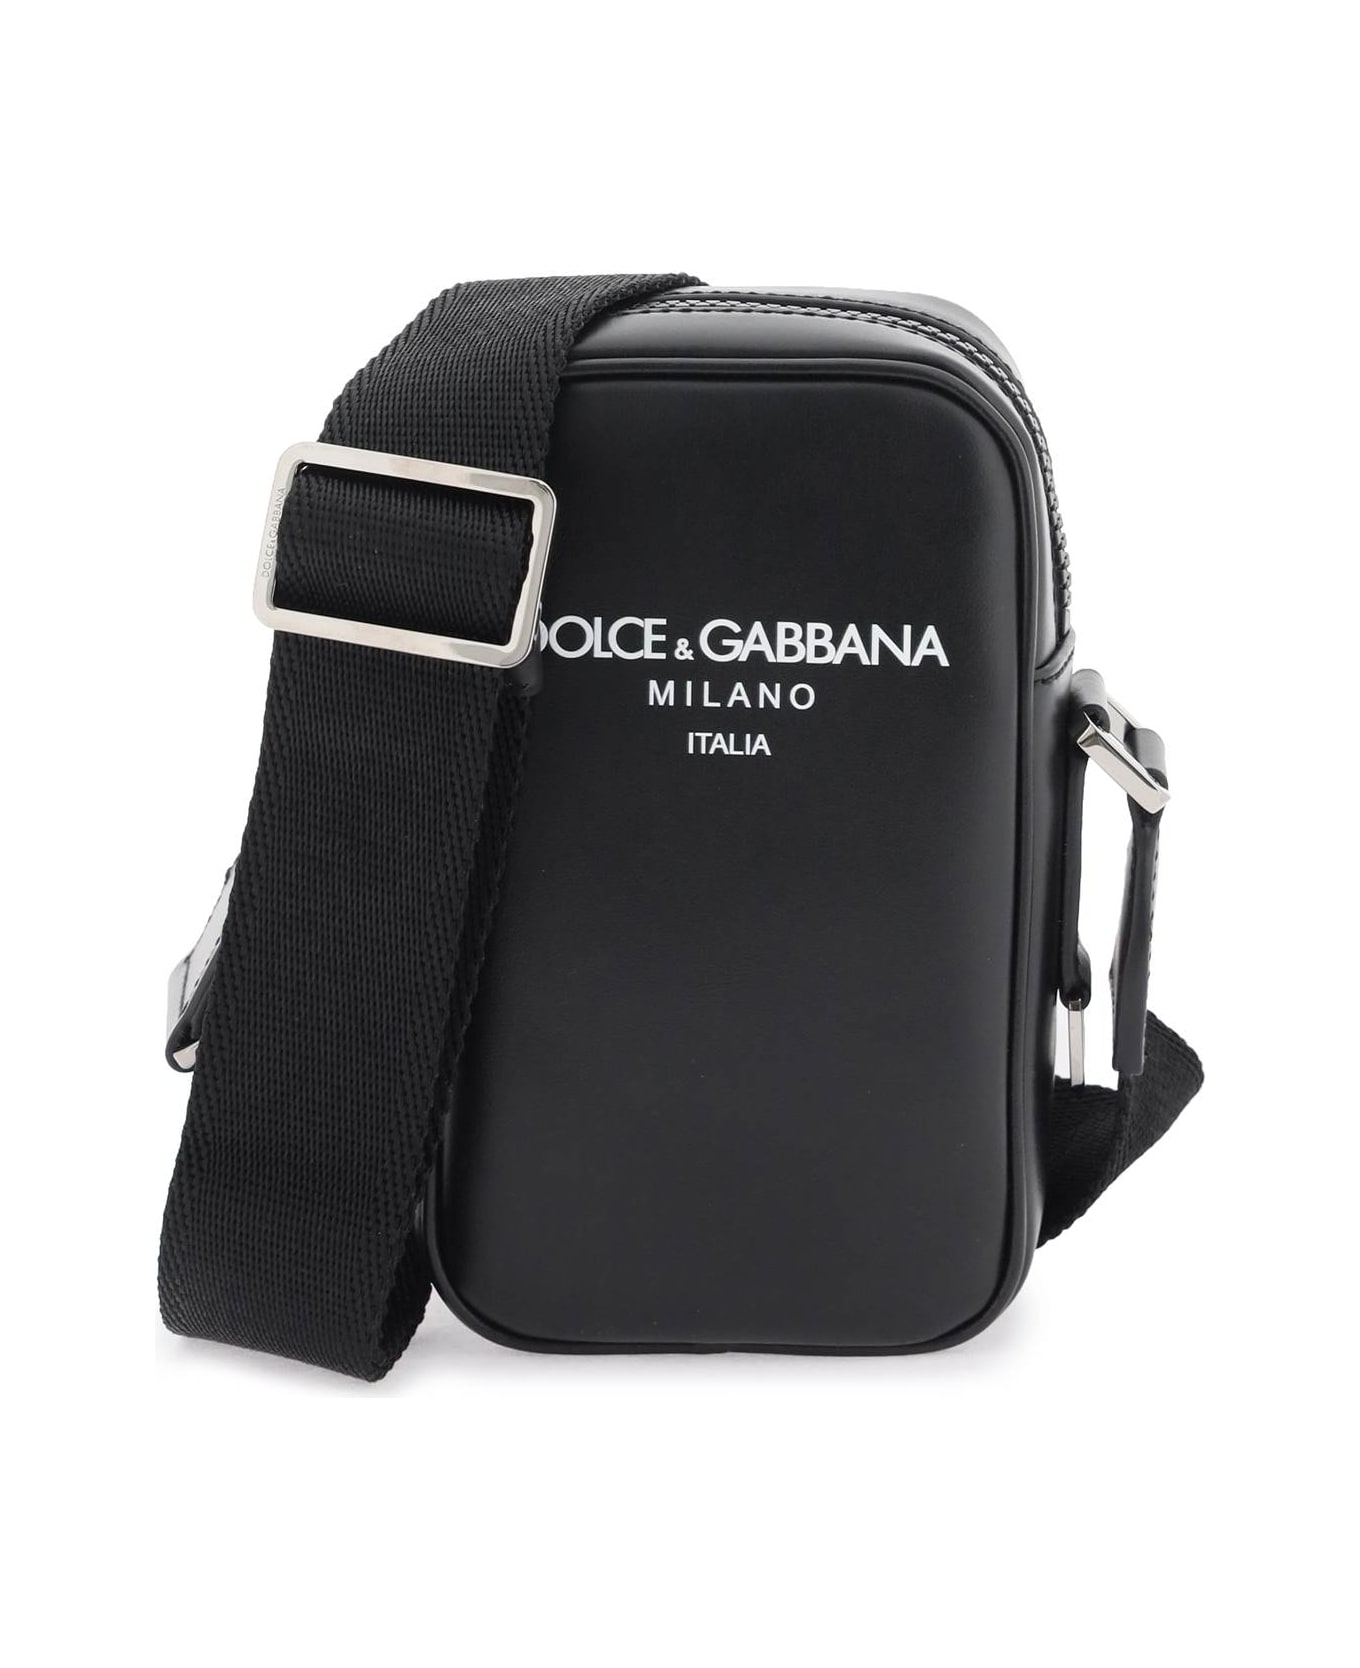 Dolce & Gabbana Small Leather Crossbody Bag - Black